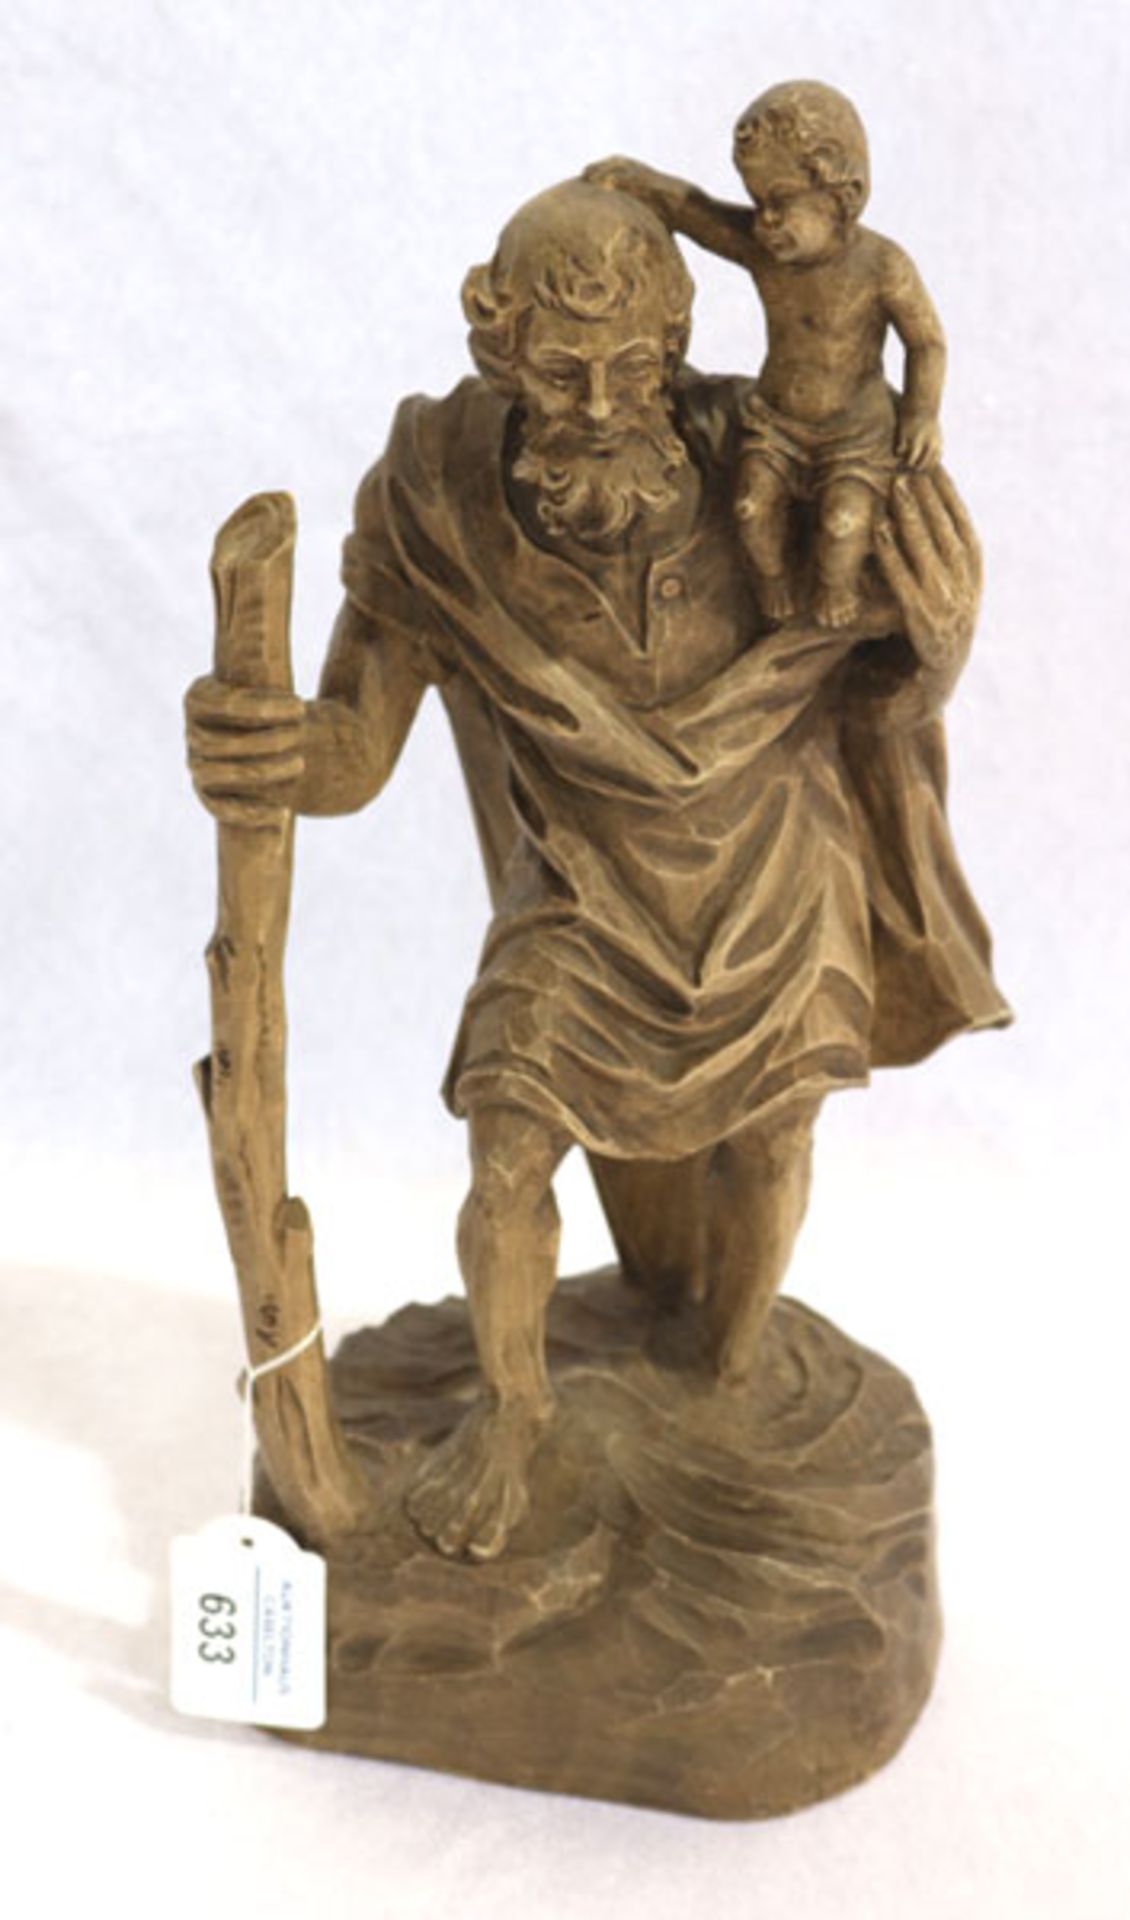 Holz Figurenskulptur 'Heiliger Christophorus', gebeizt, H 35 cm